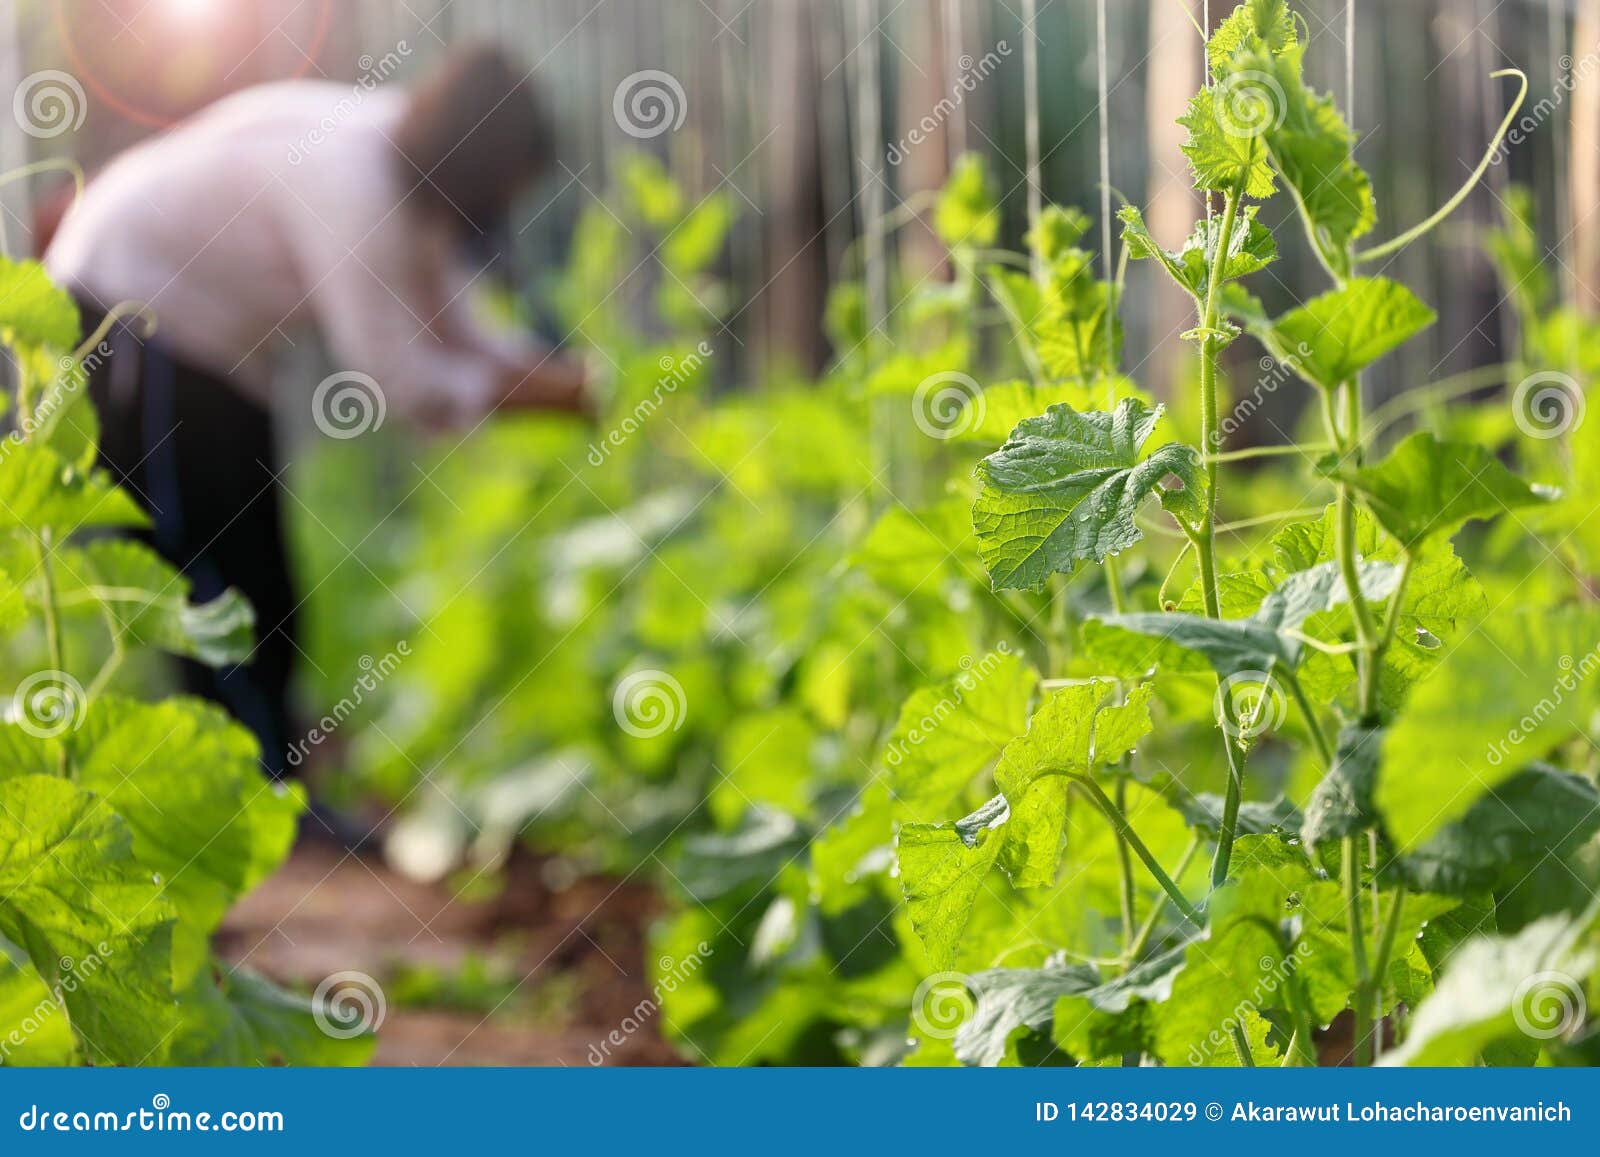 Gardener Tending To The Row Of Vegetable In The Garden Stock Image